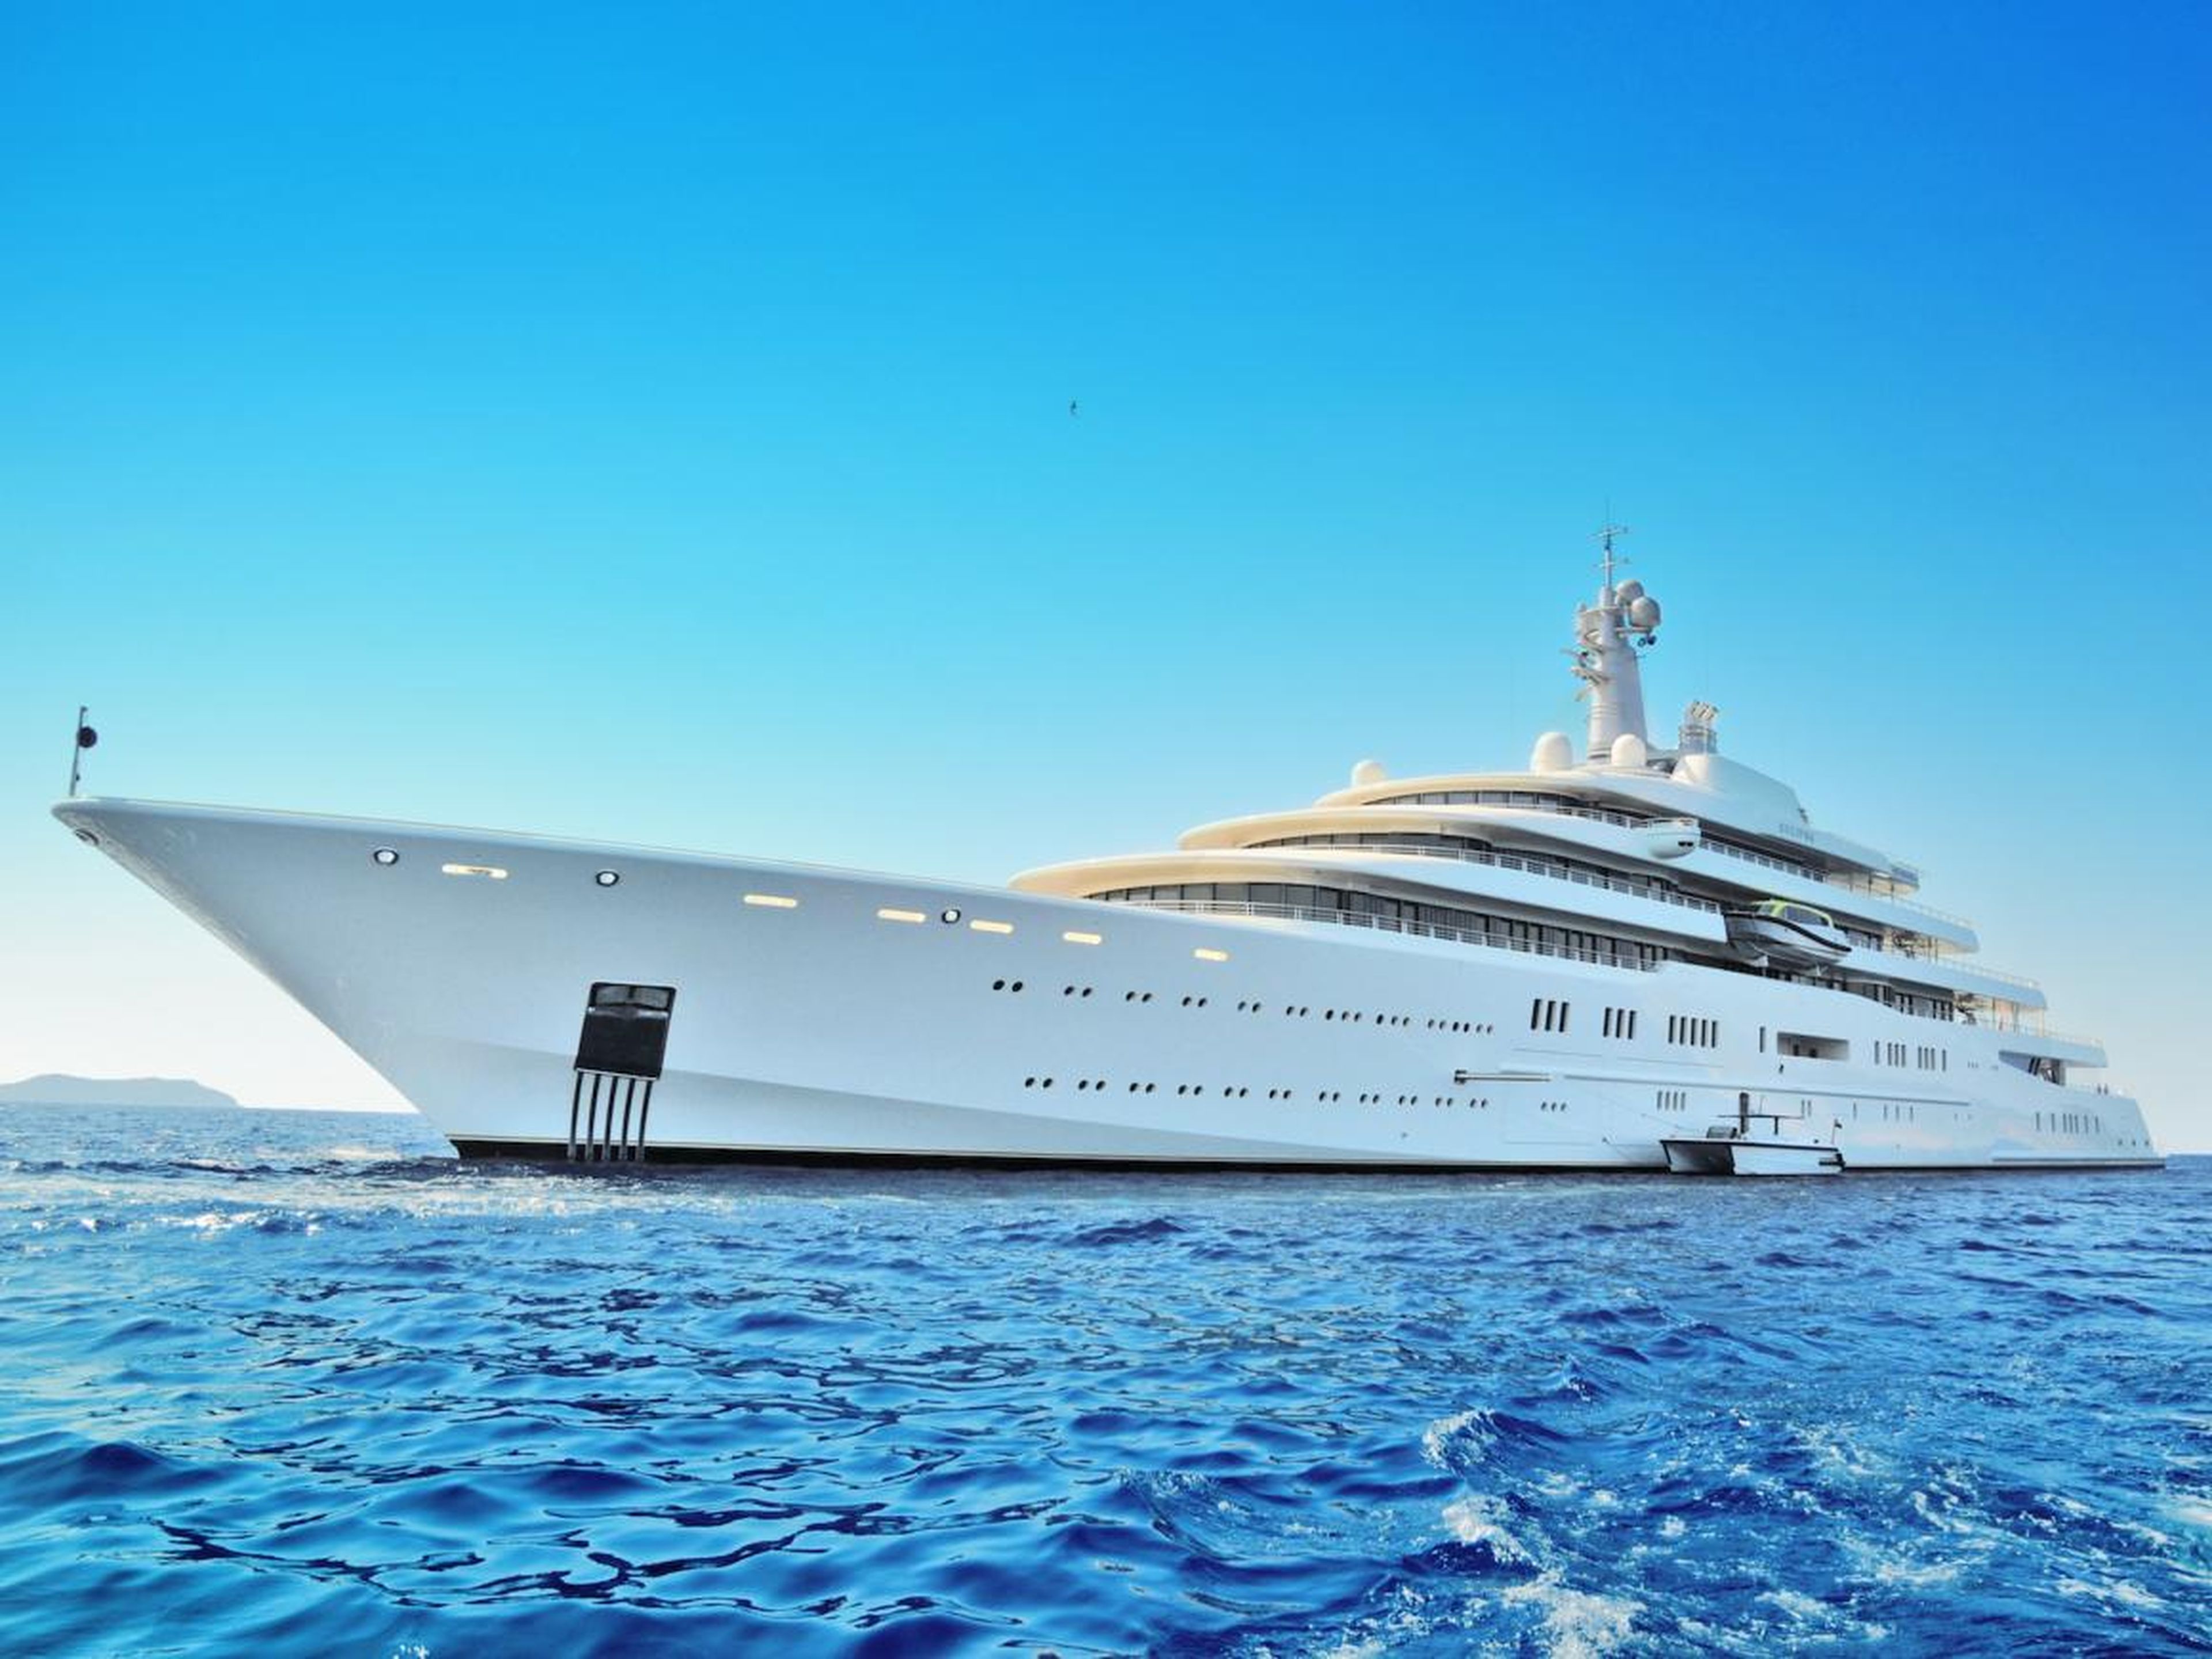 5. Luxurious superyachts